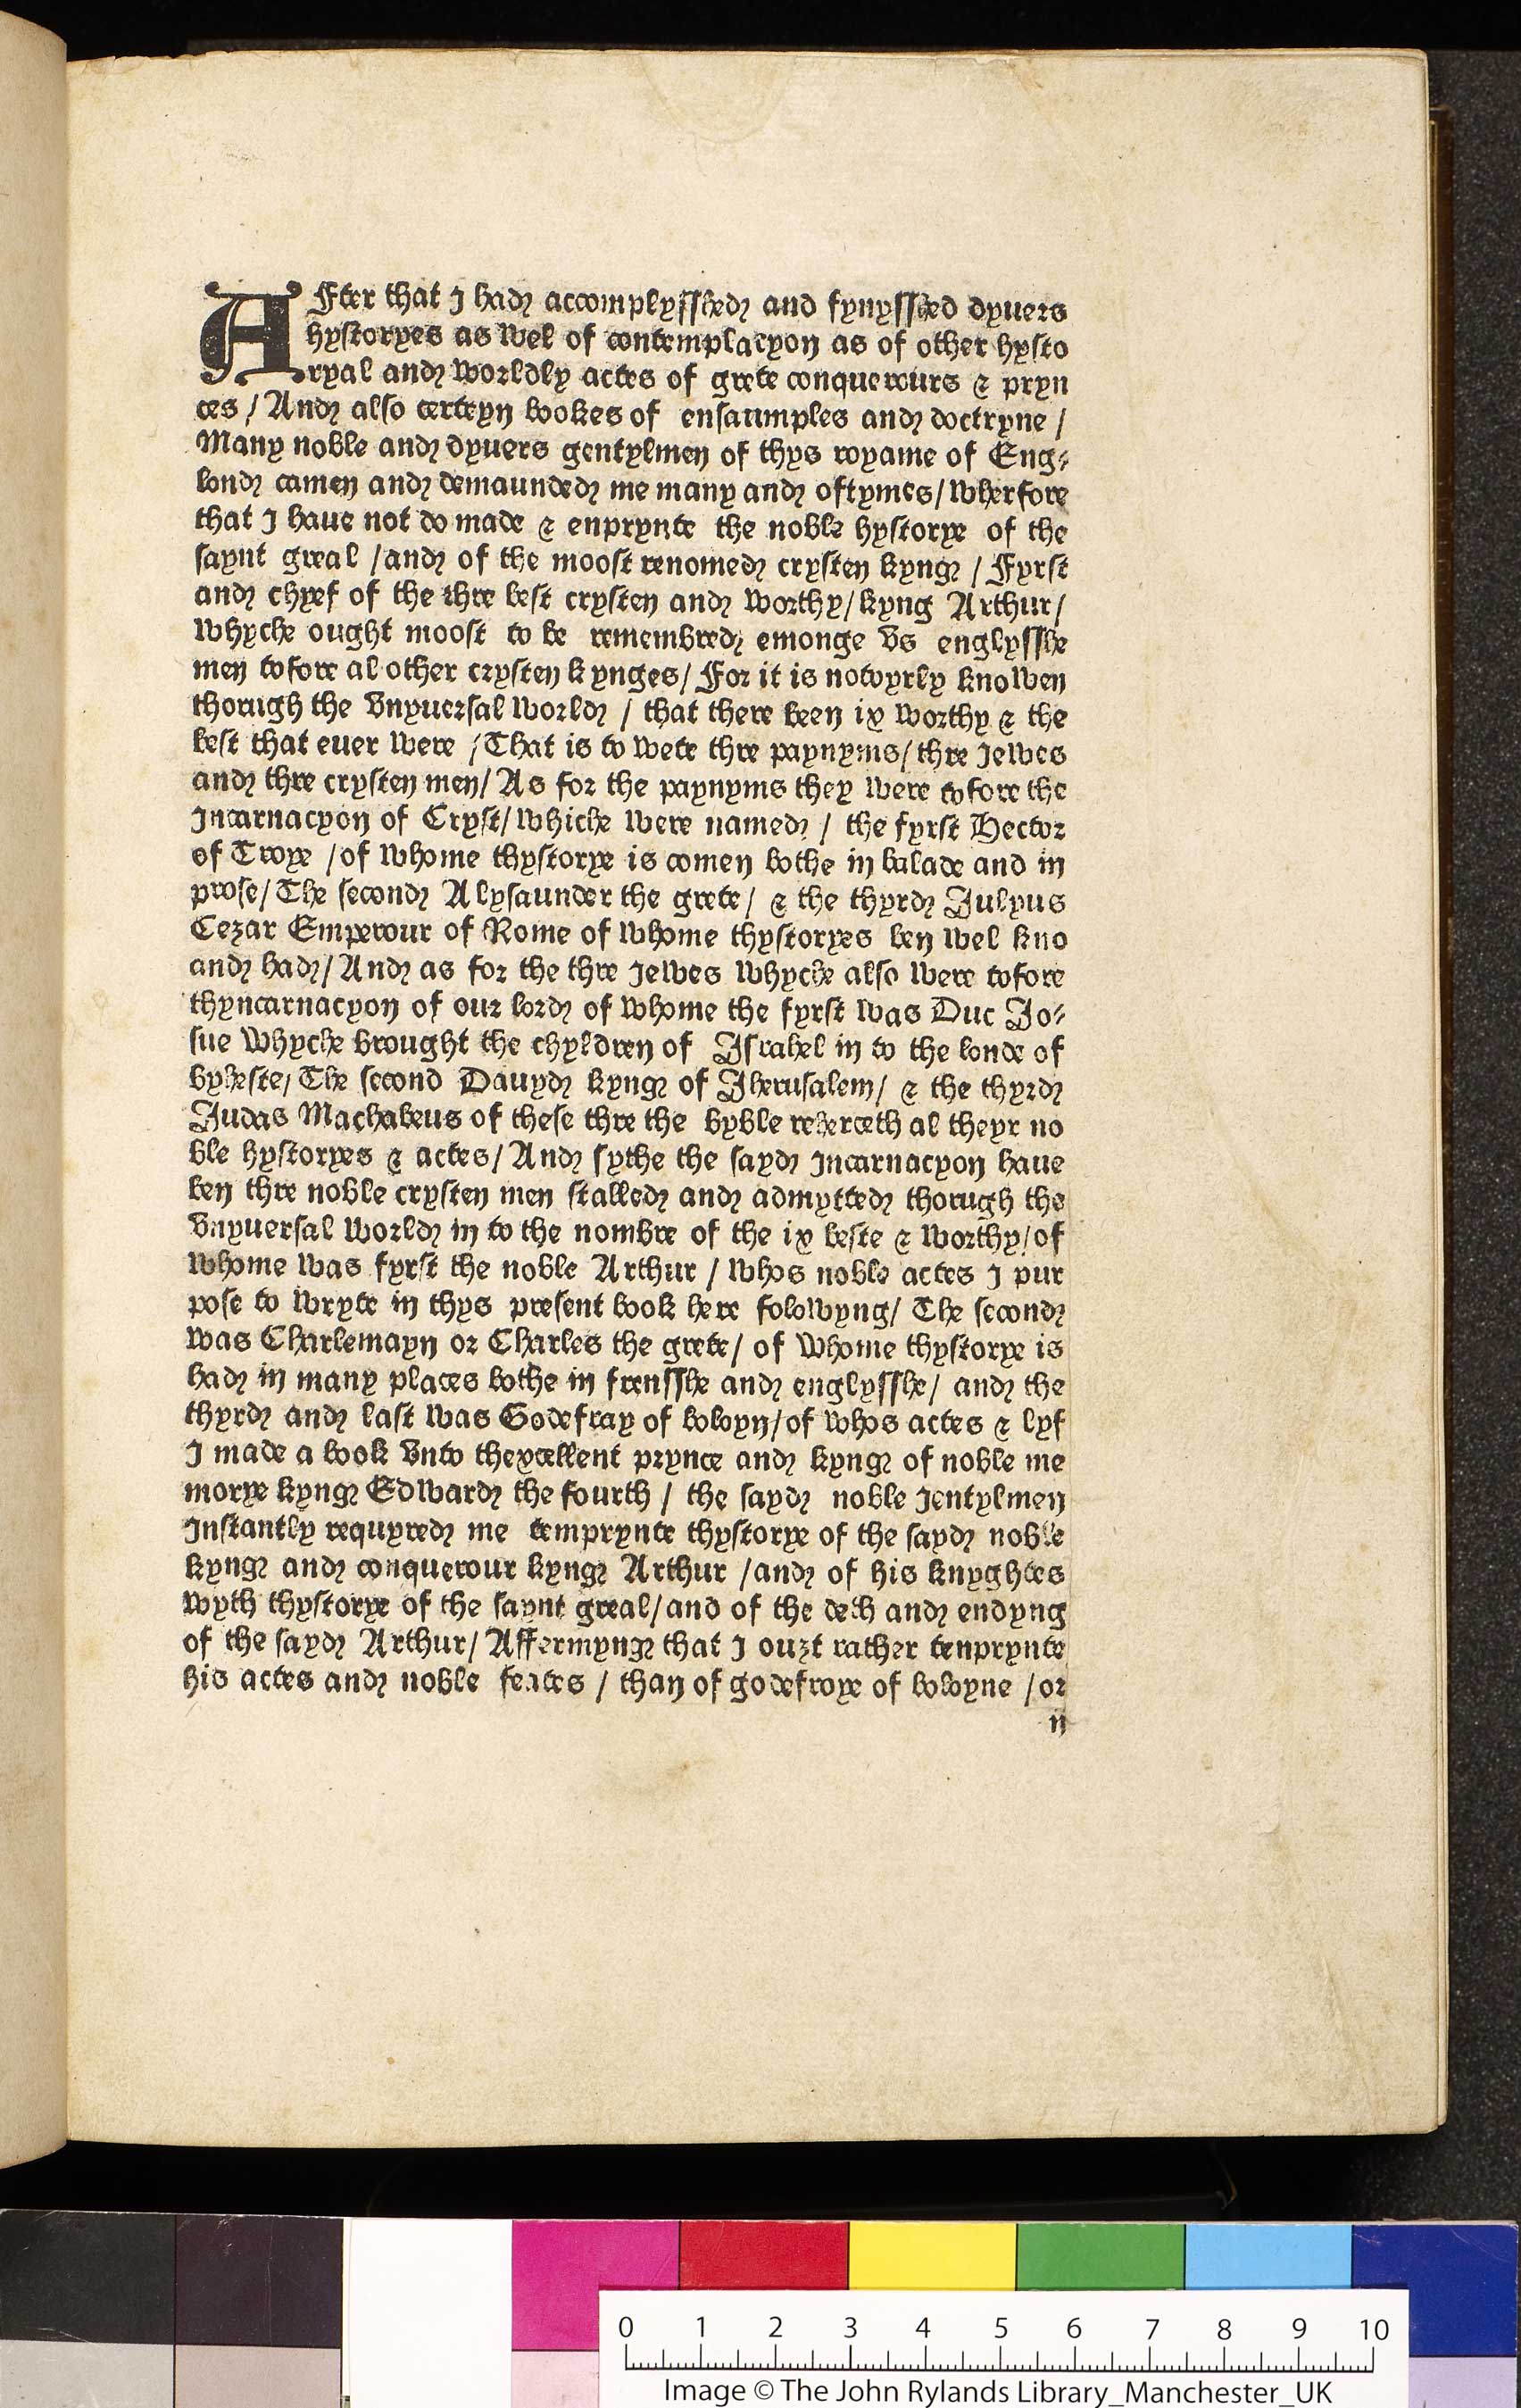 Facsimile of John Rylands Library copy